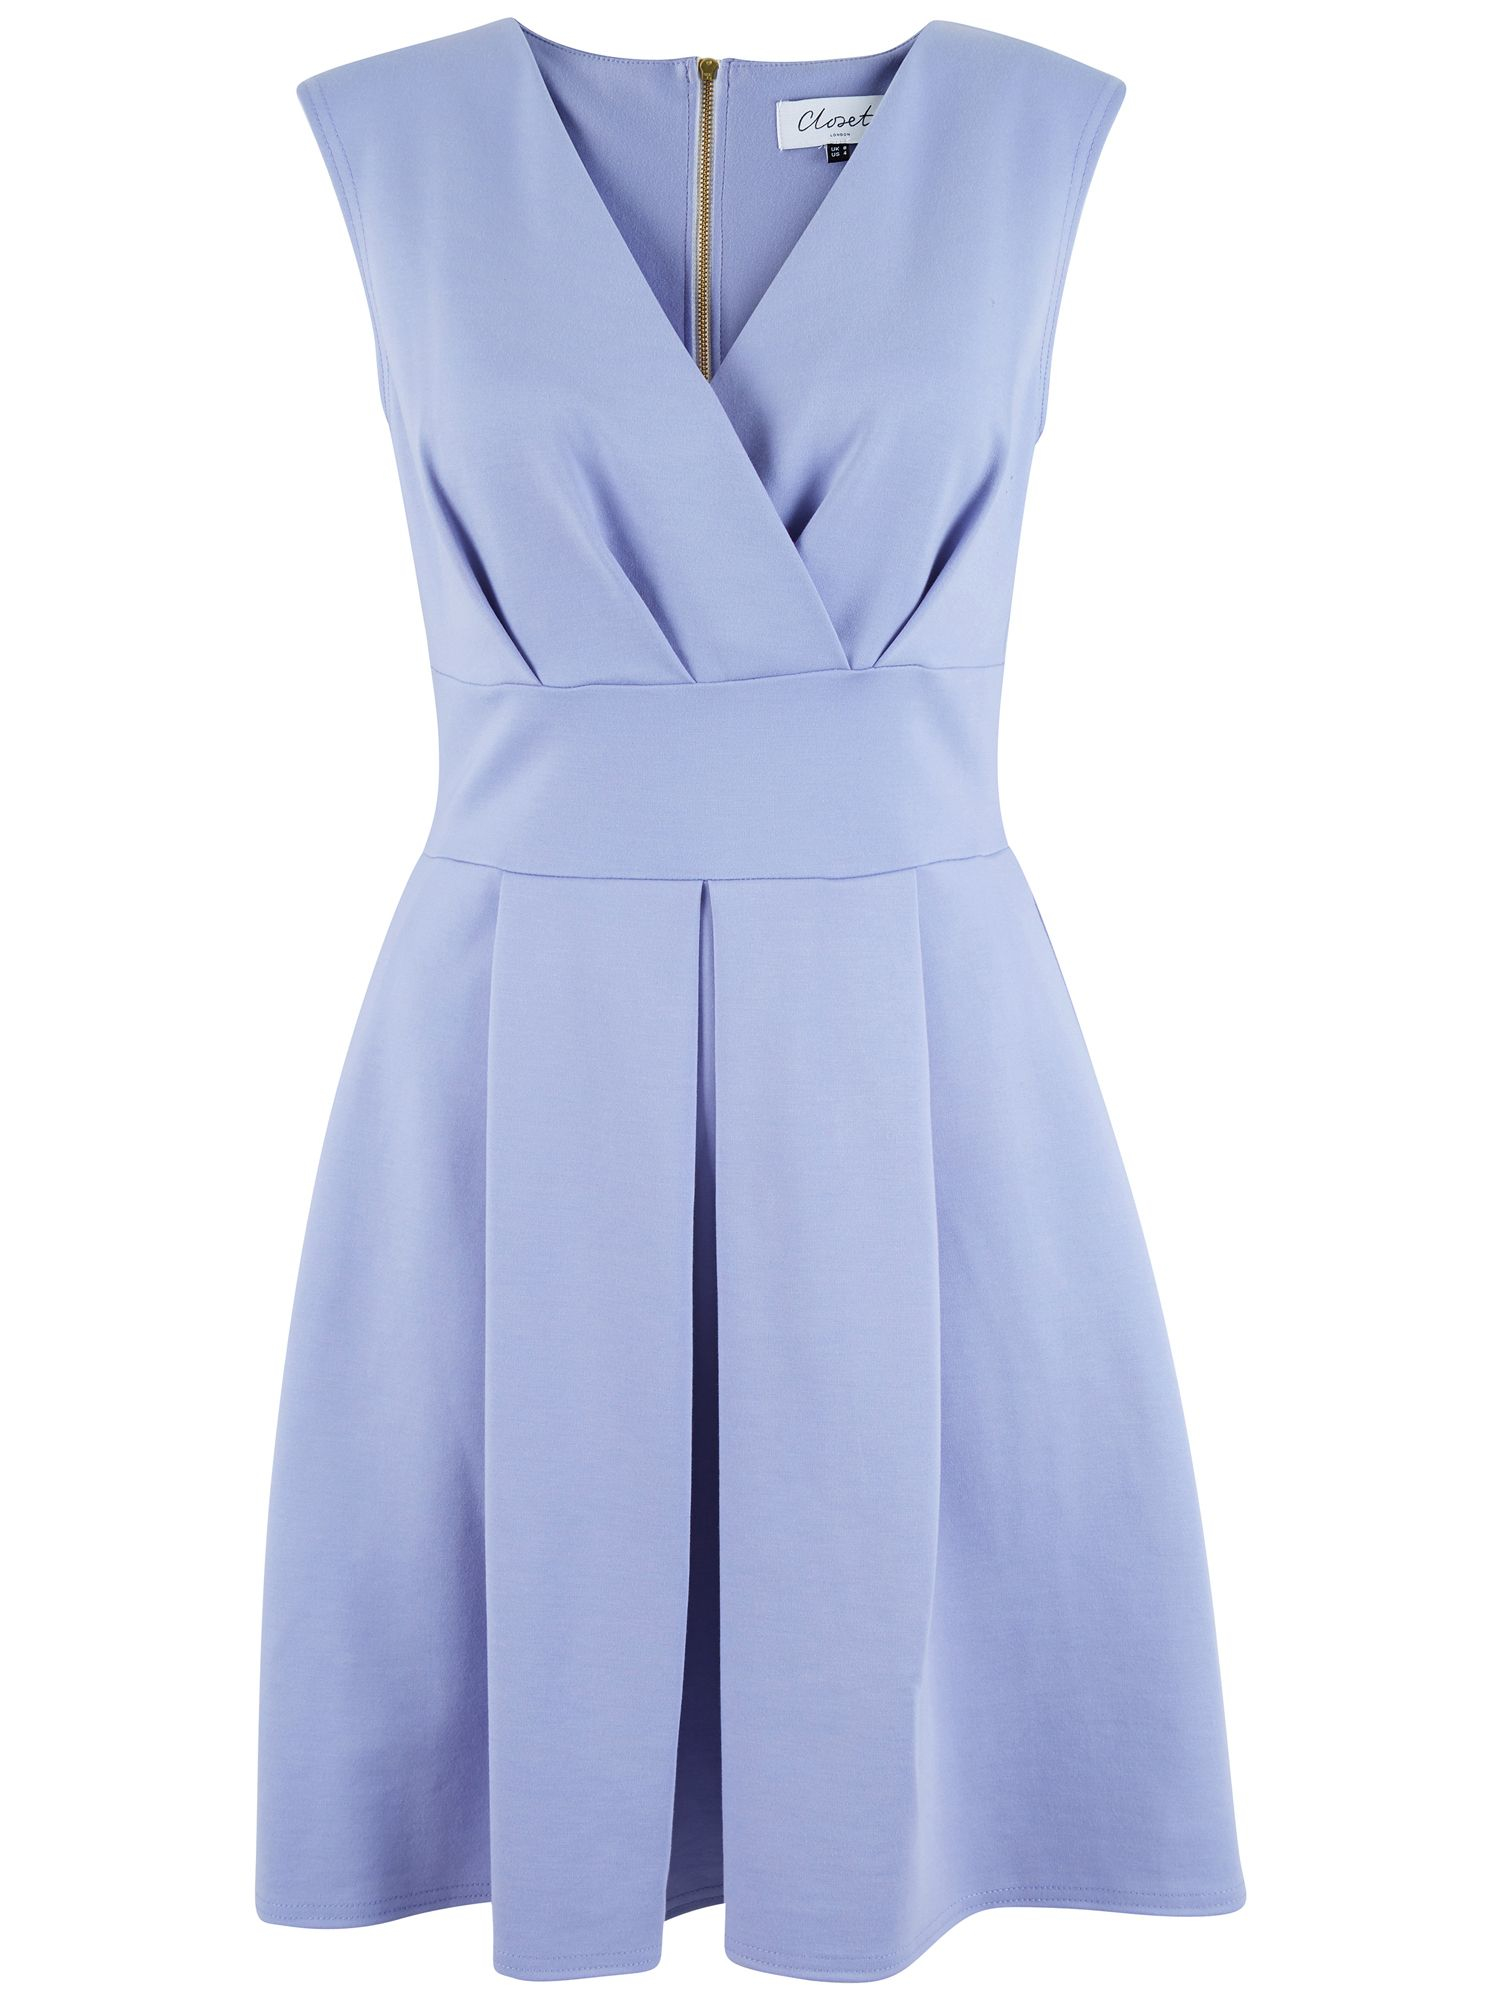 Closet Cross Over Box Pleat Dress in Blue (Pastel Blue) | Lyst